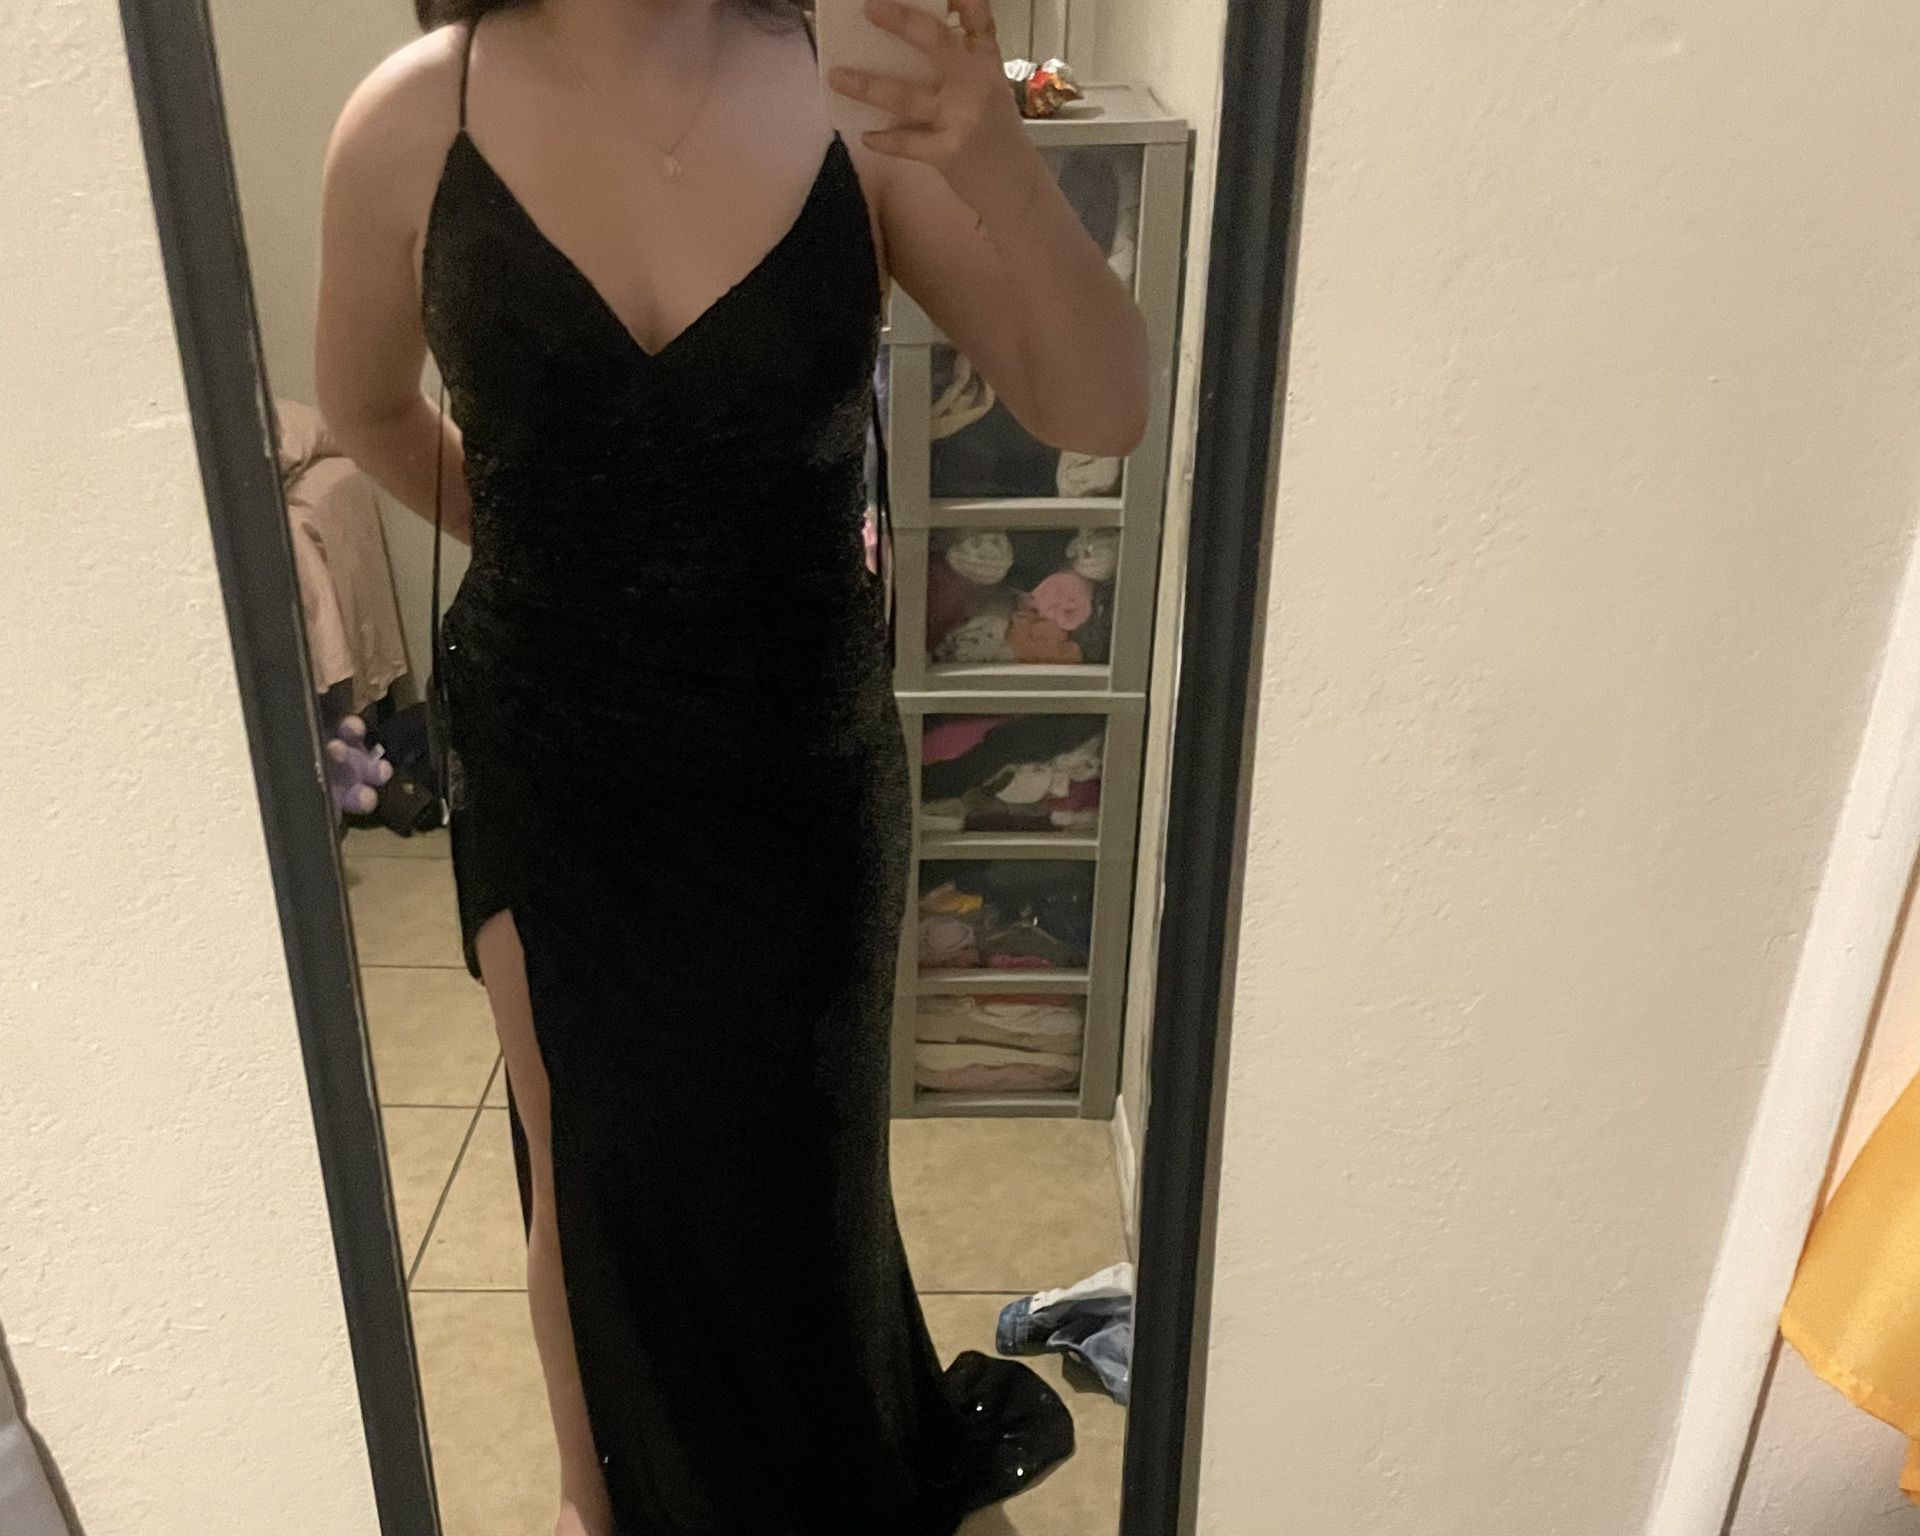 Black Prom Dress 